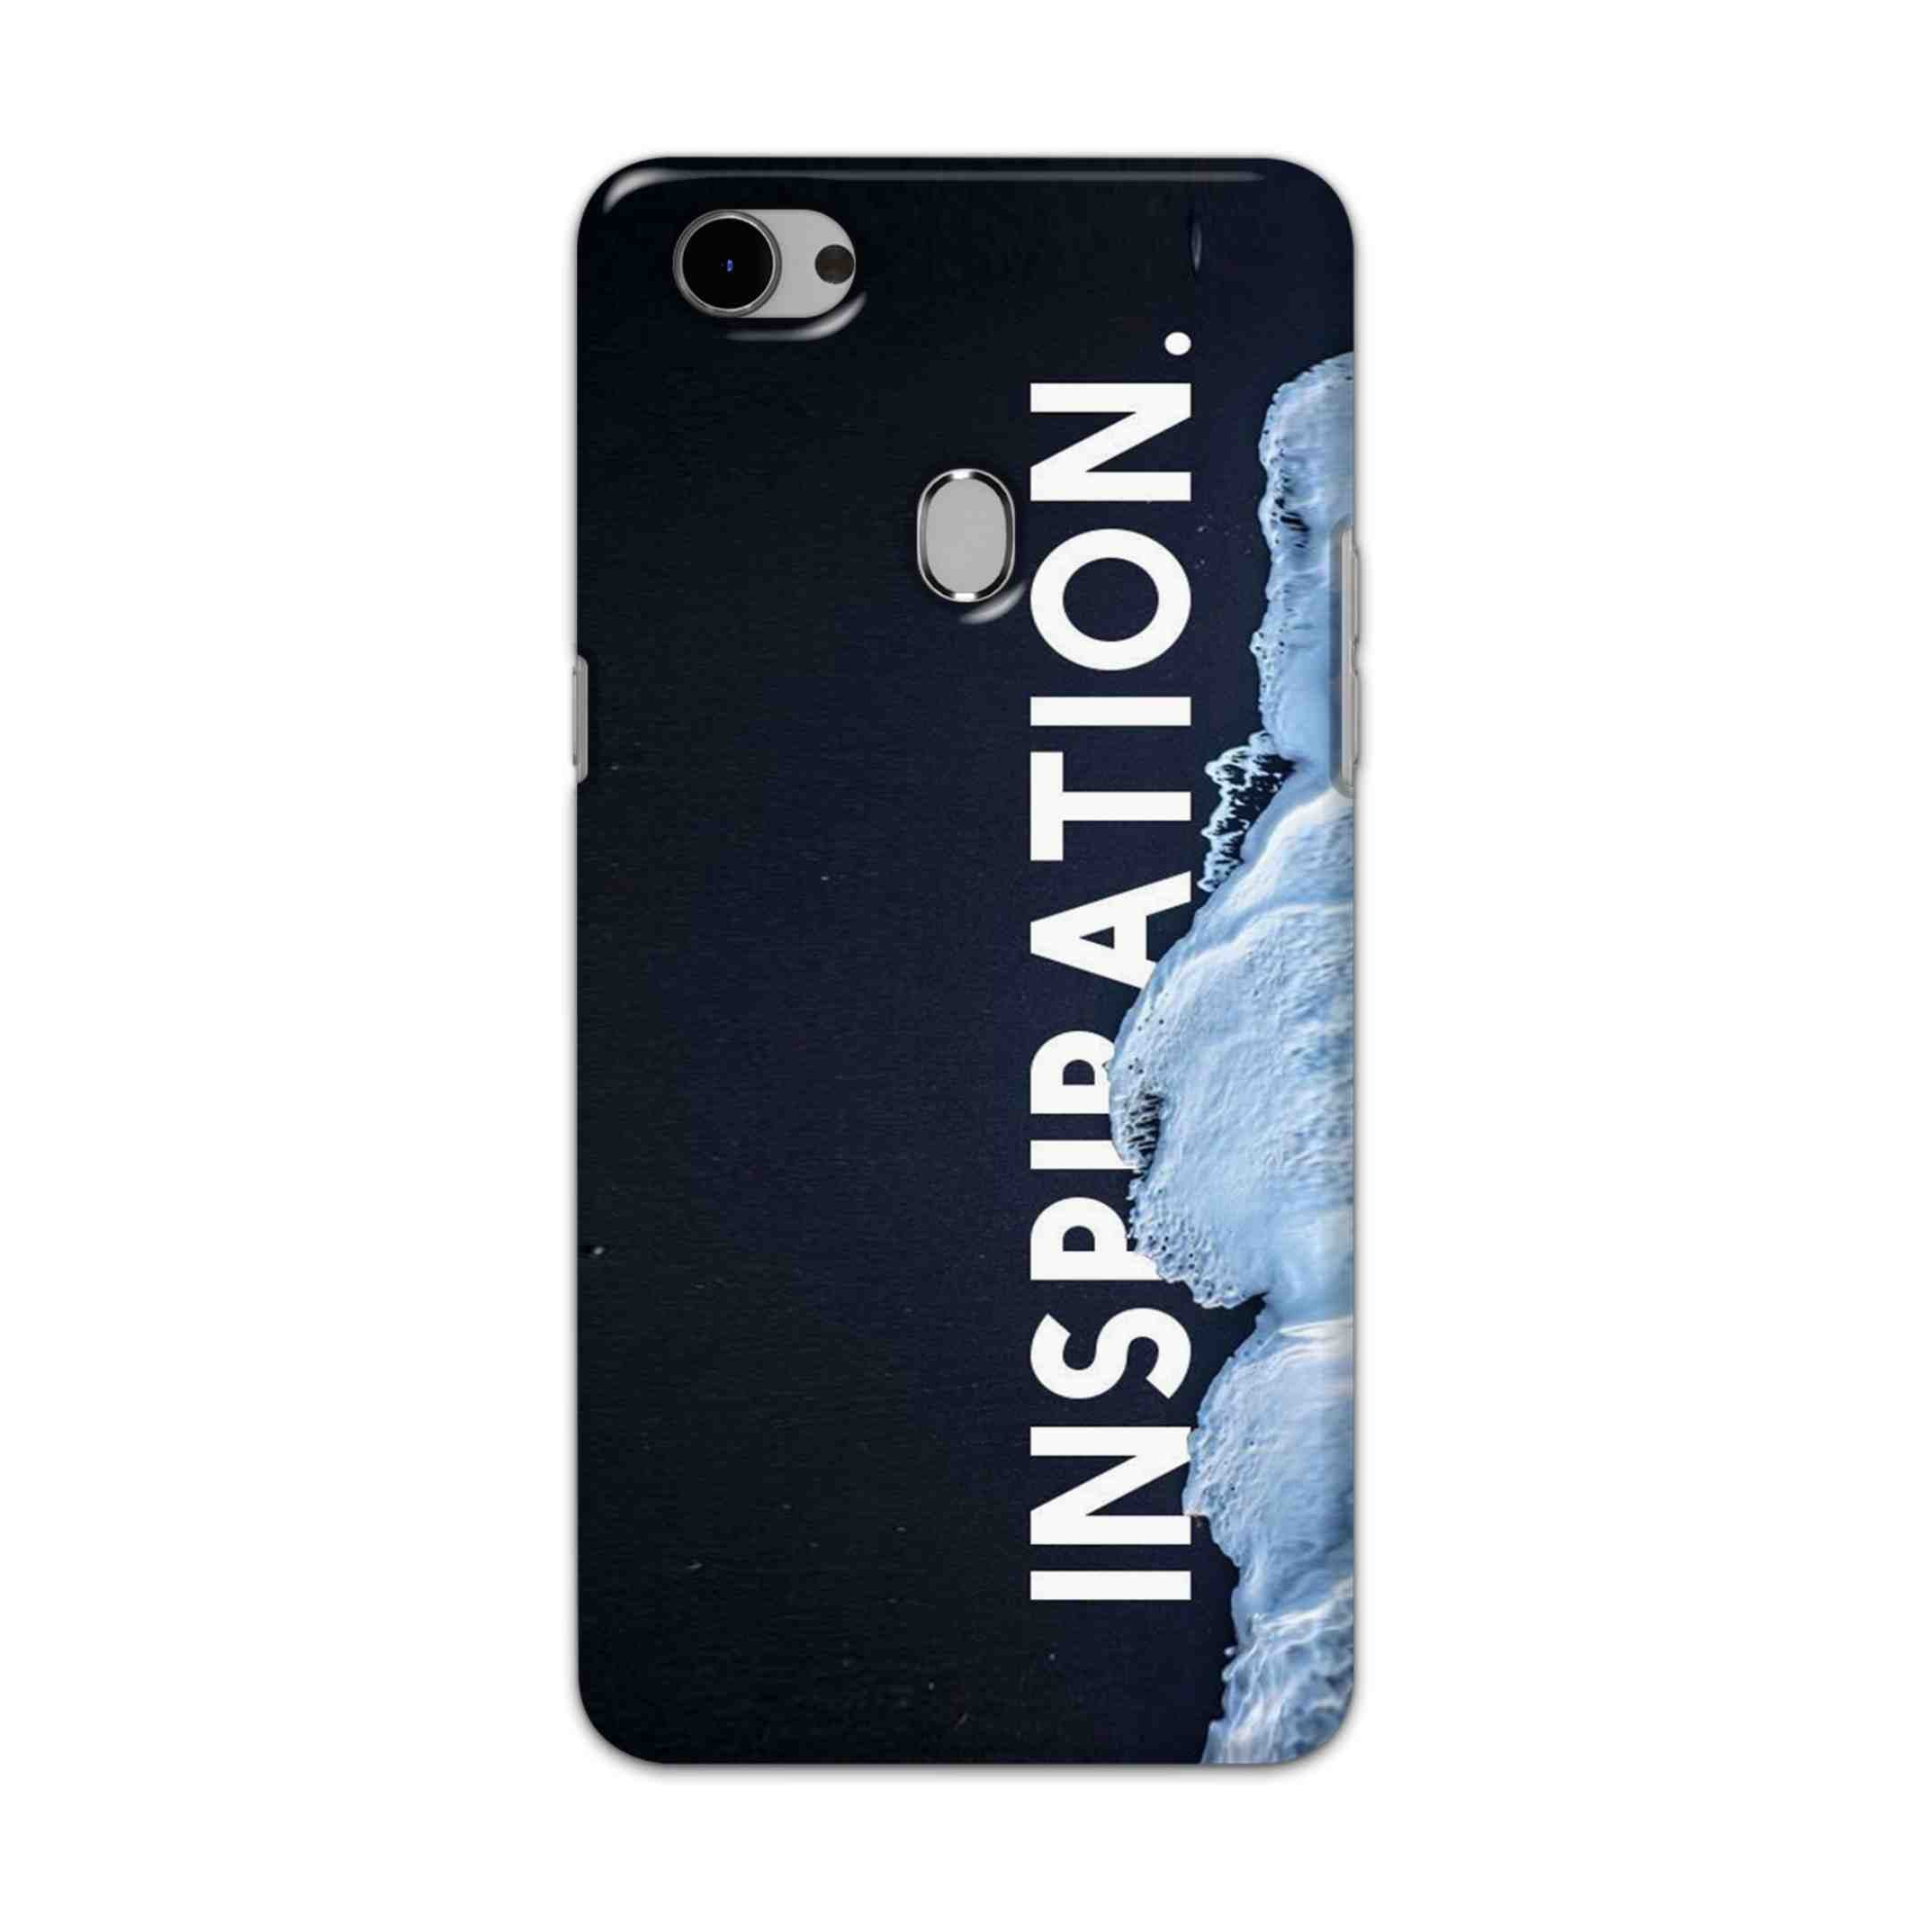 Buy Inspiration Hard Back Mobile Phone Case Cover For Oppo F7 Online